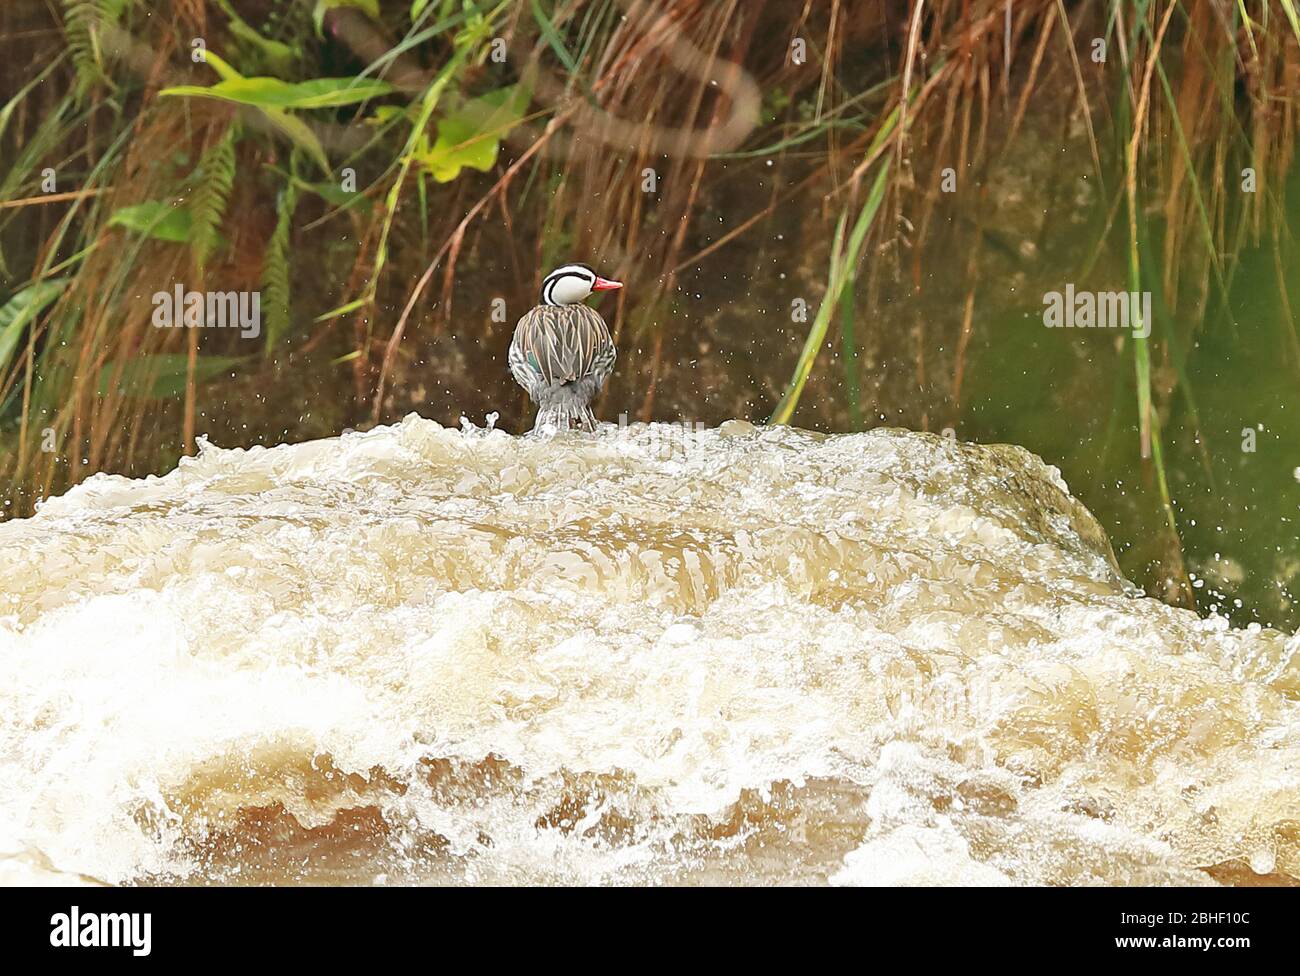 Torrent Duck (Merganetta armata leucogenis) adult male standing on rock in river  Atuen River, Peru                         March Stock Photo